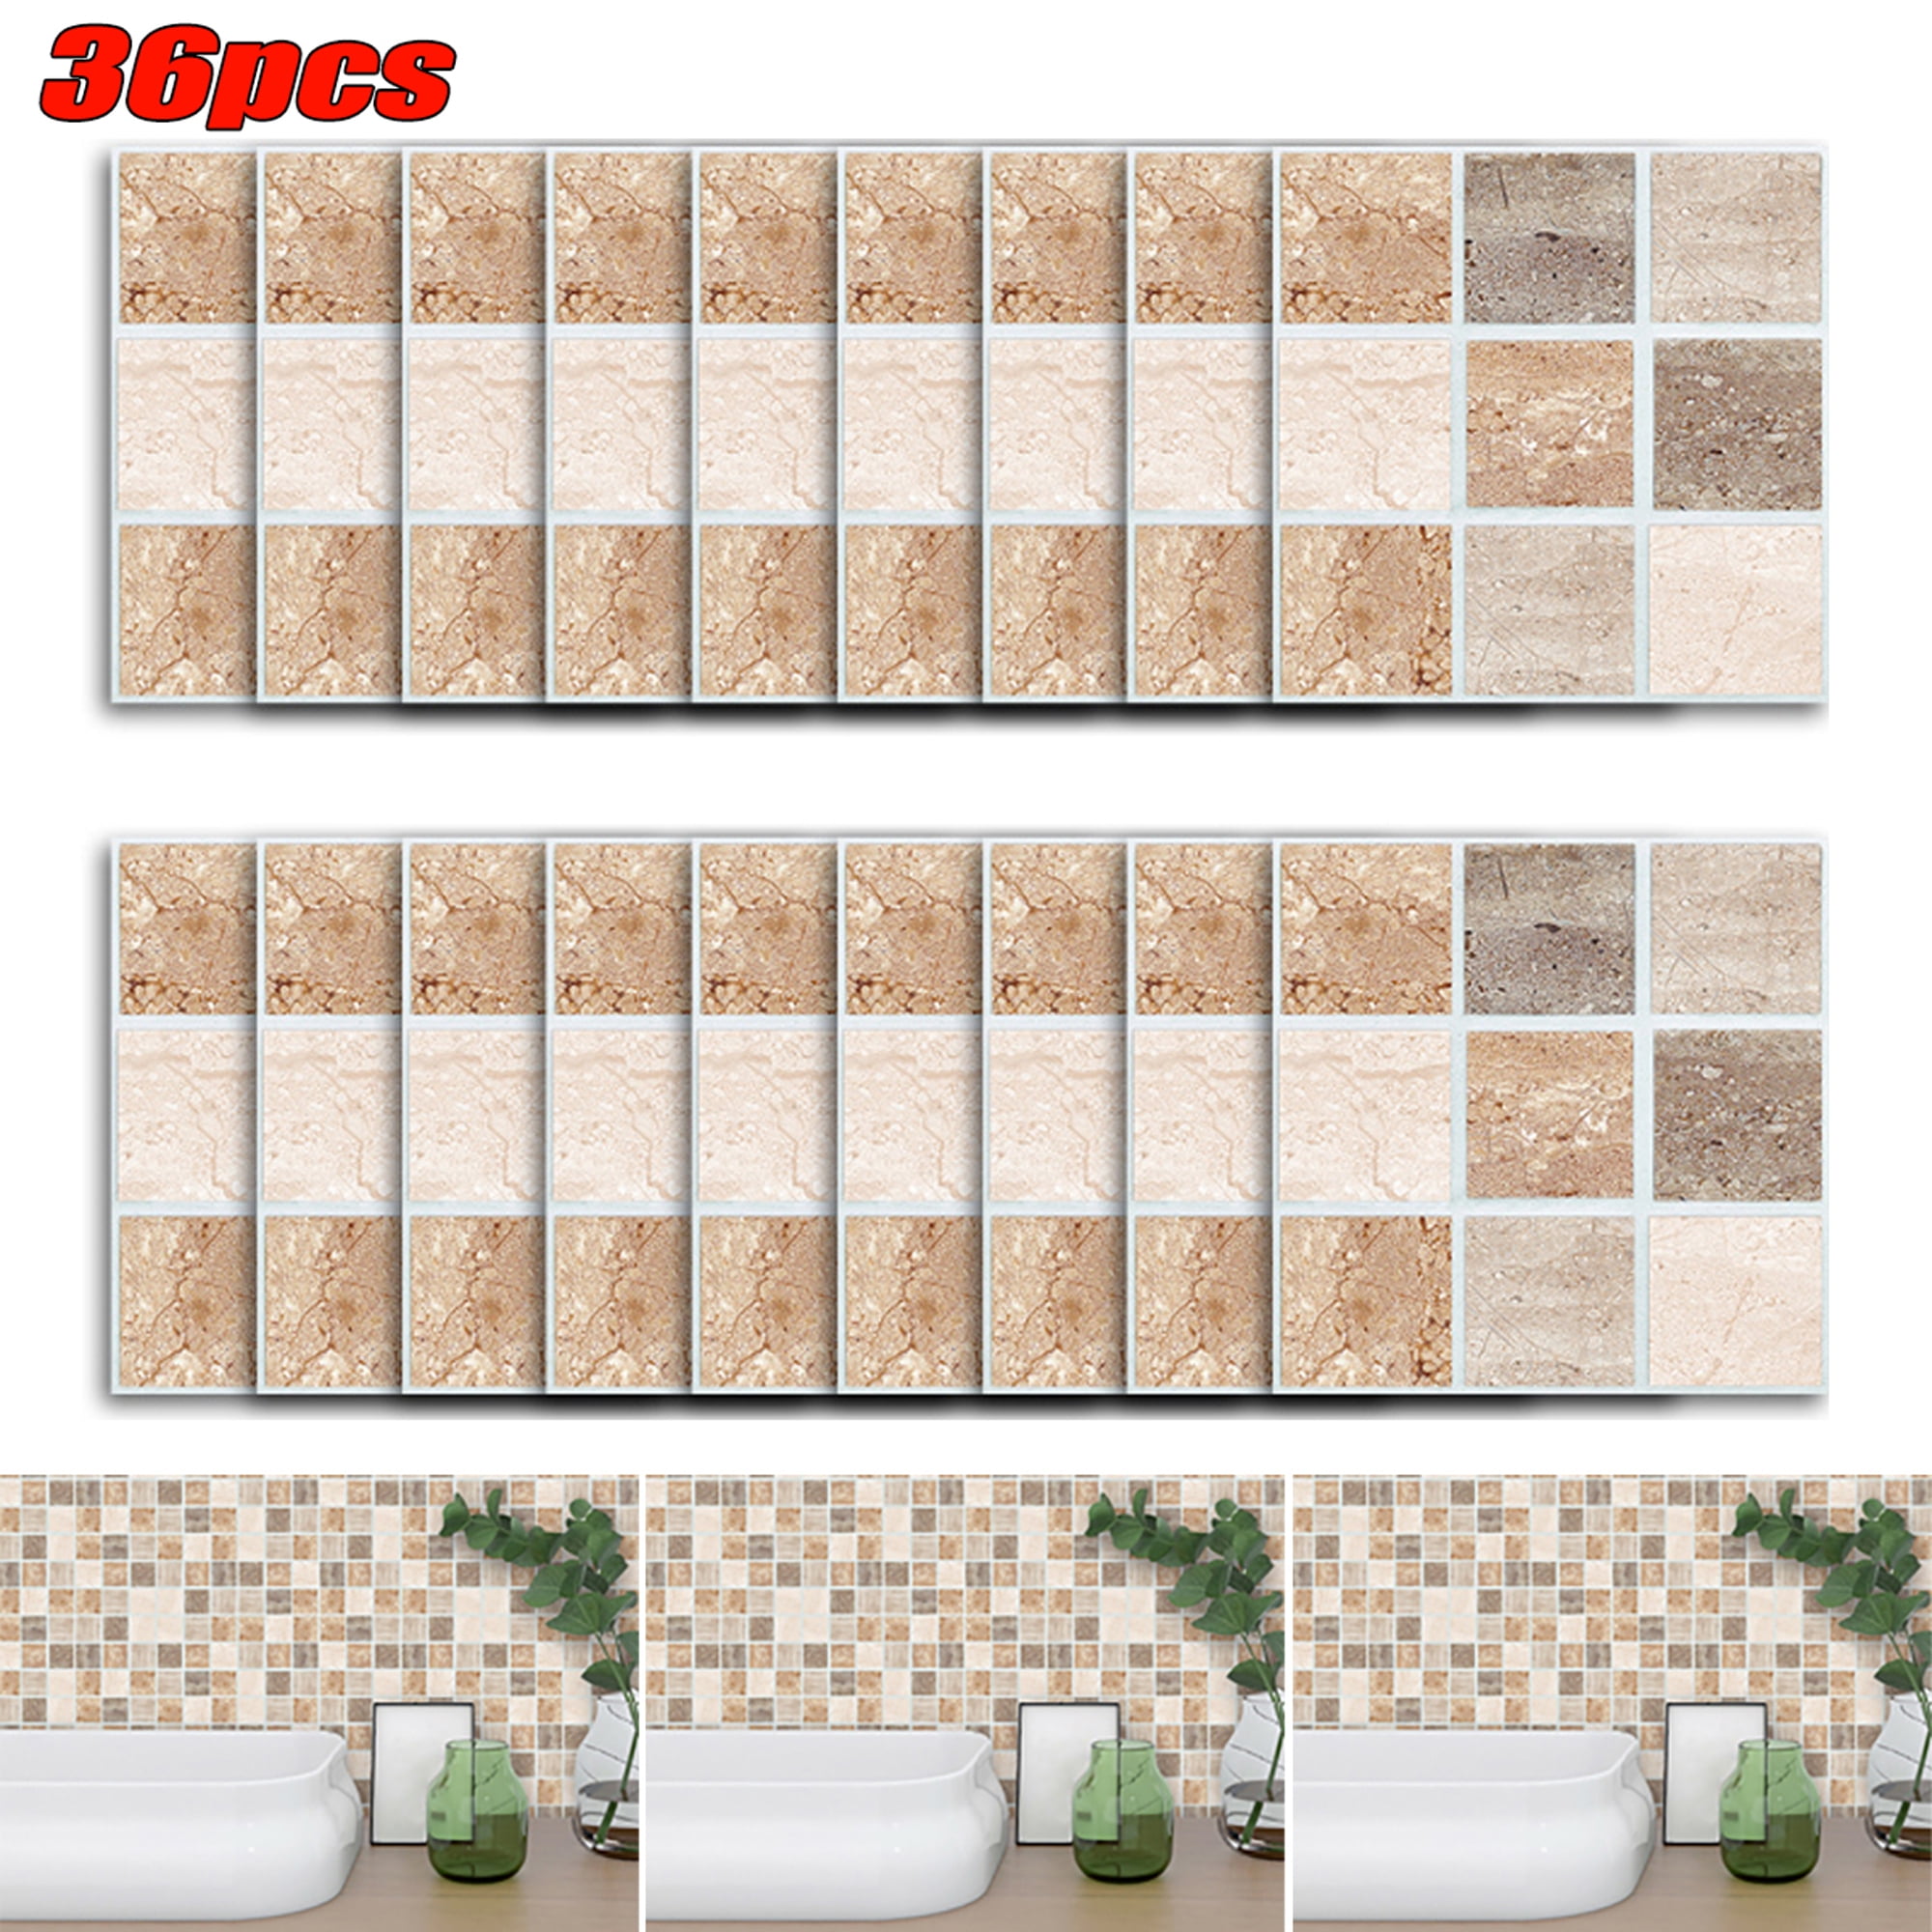 10 pcs DIY Mosaic 3D Self Adhesive Wall Tile Sticker Bathroom Kitchen Home Decor